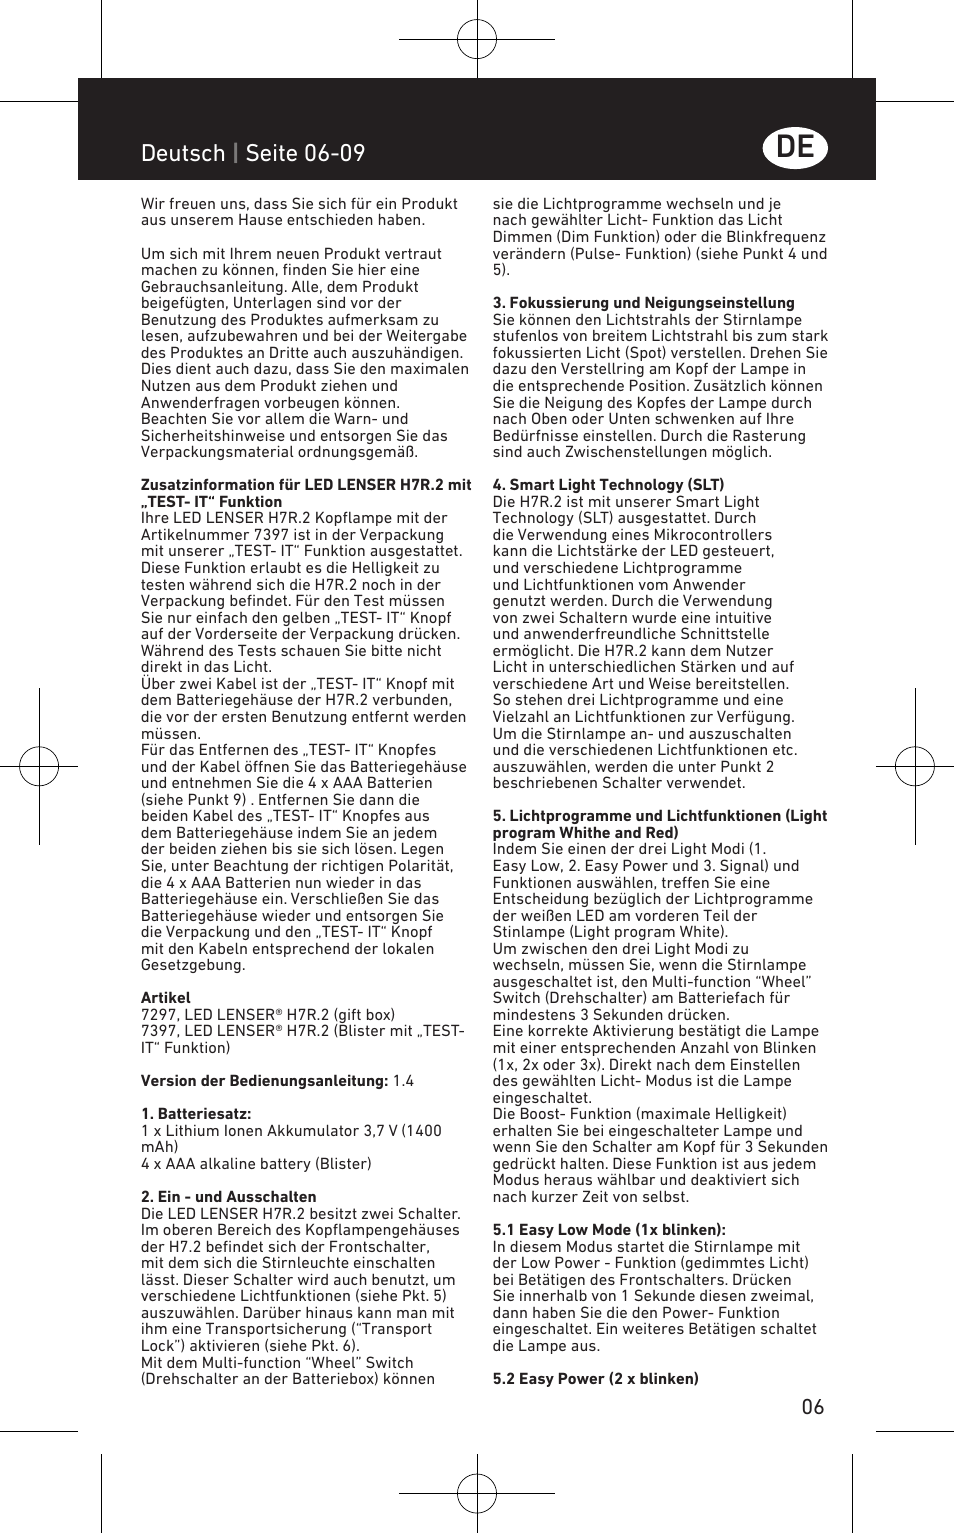 Deutsch | seite 06-09 | LED LENSER H7R.2 User Manual | Page 7 / 50 |  Original mode